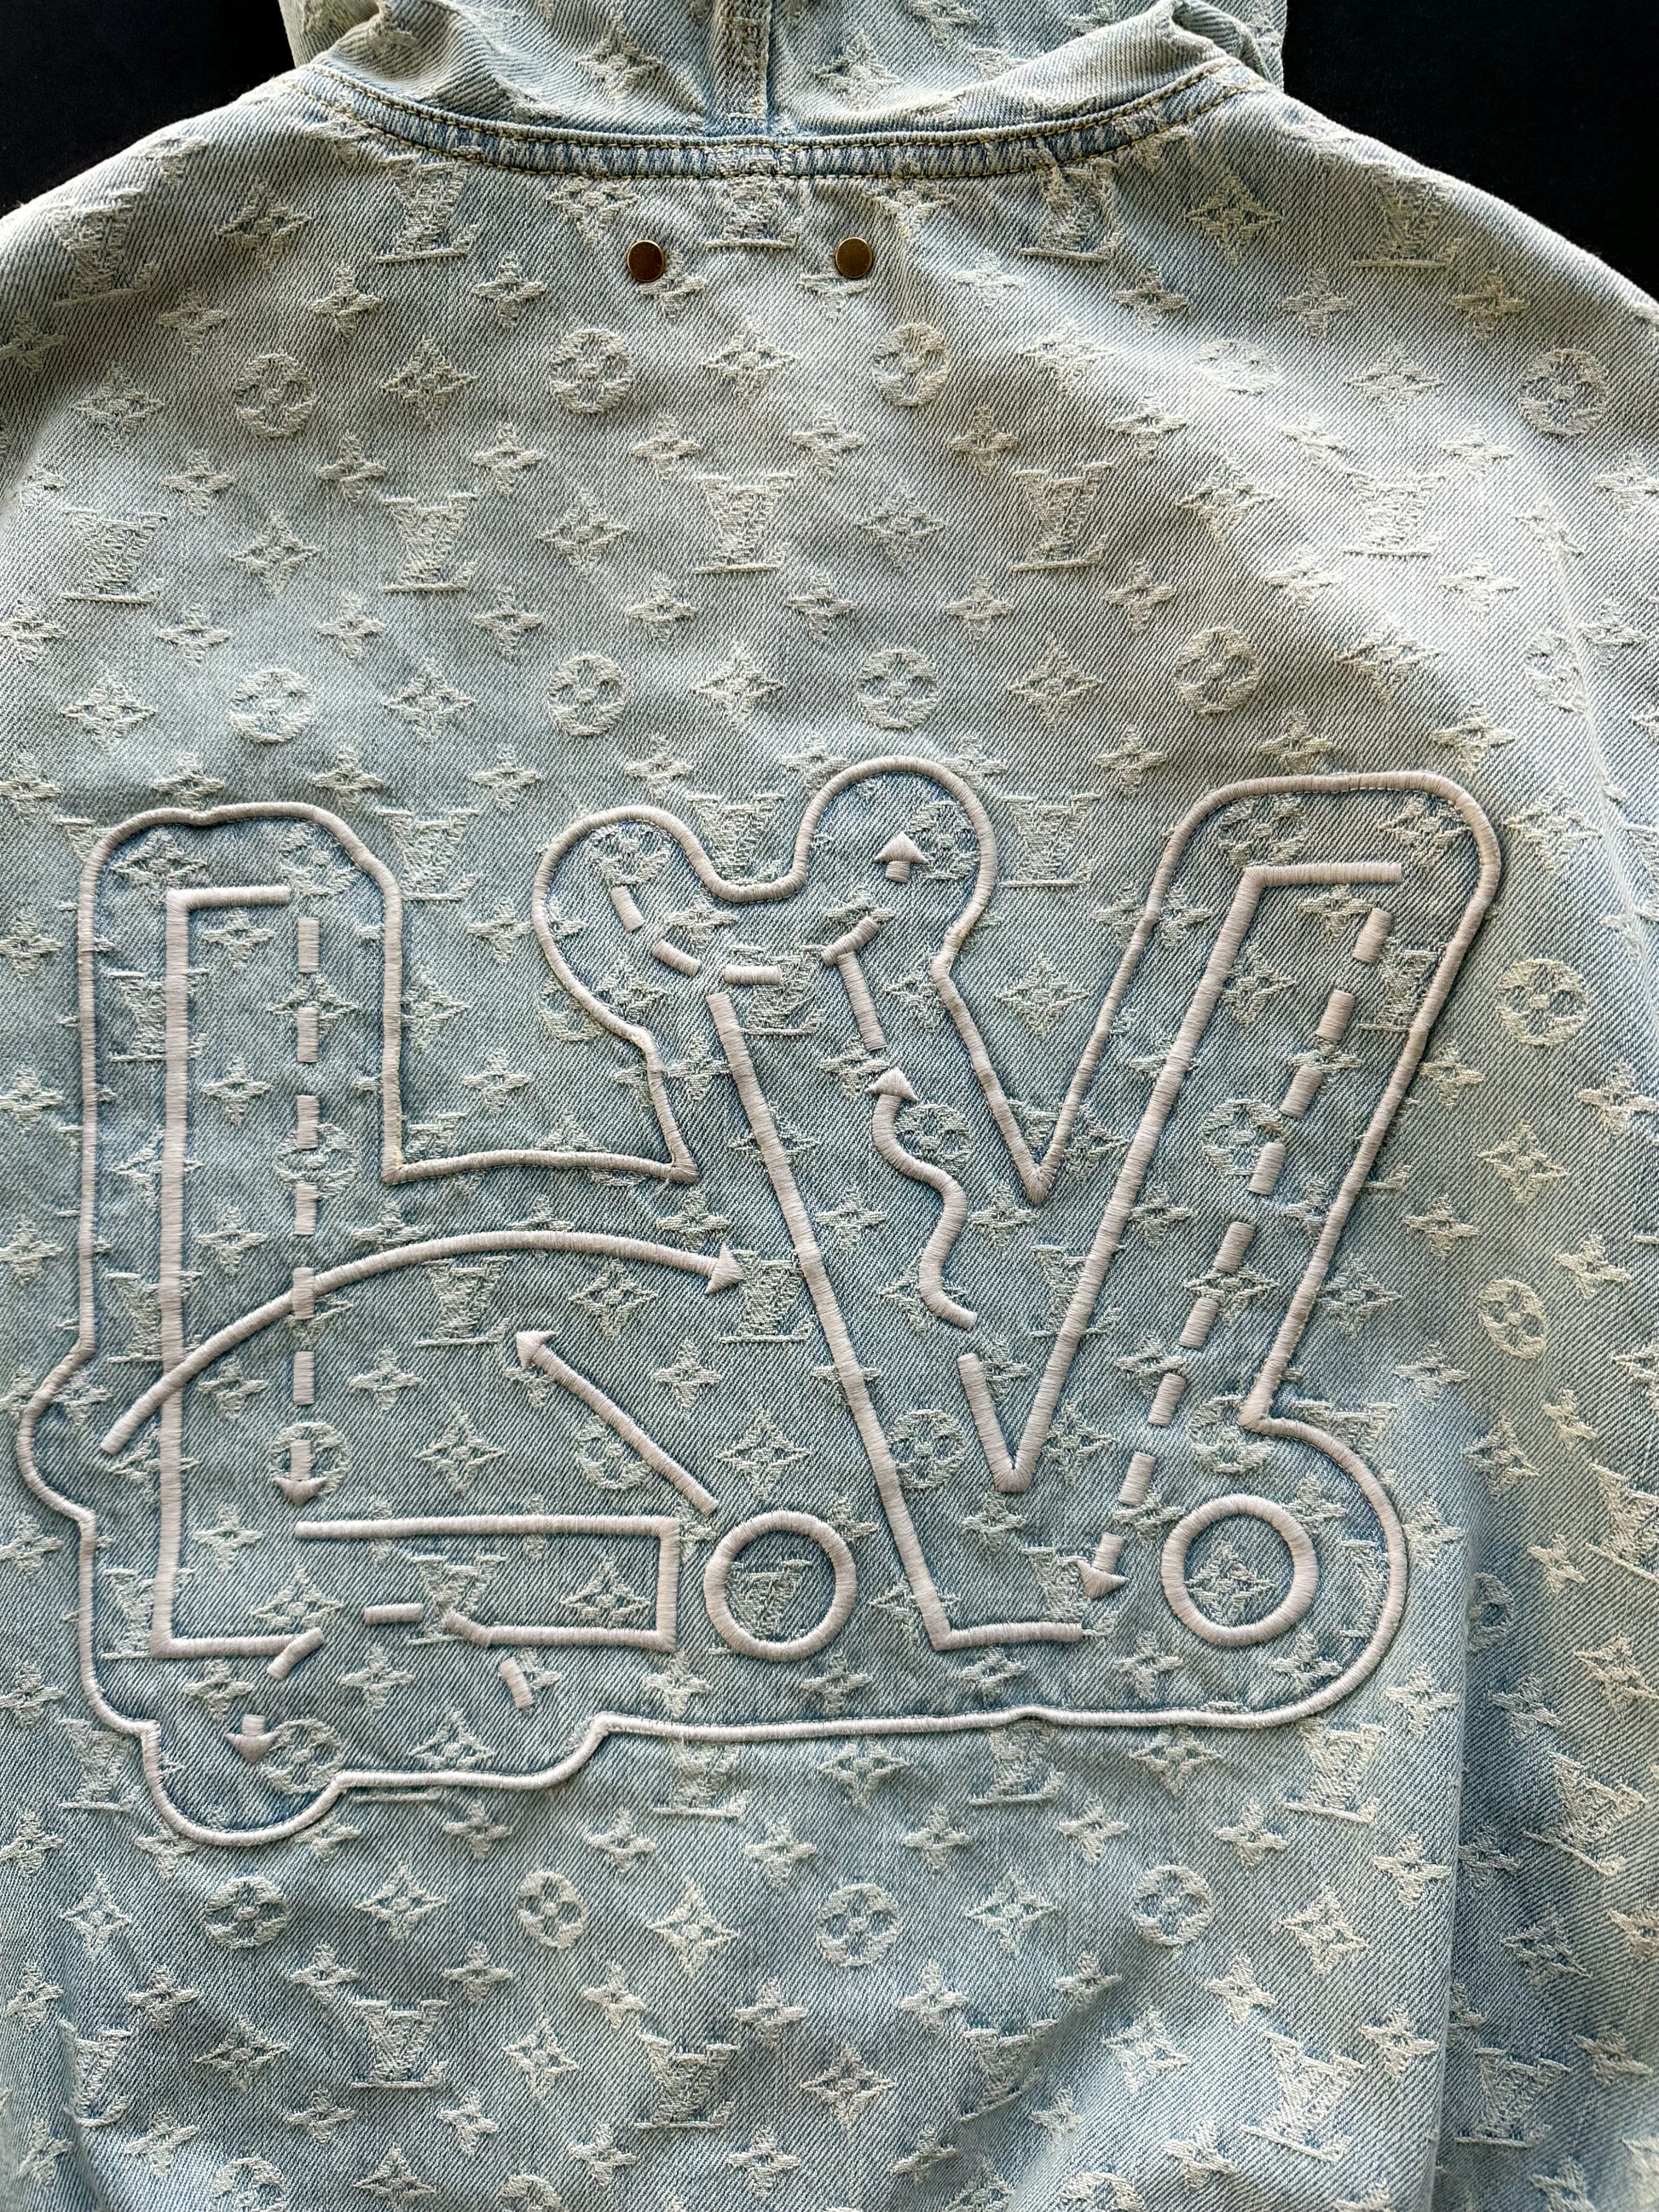 Louis Vuitton, Jackets & Coats, Louis Vuitton Reflective Windbreaker  Hooded Jacket